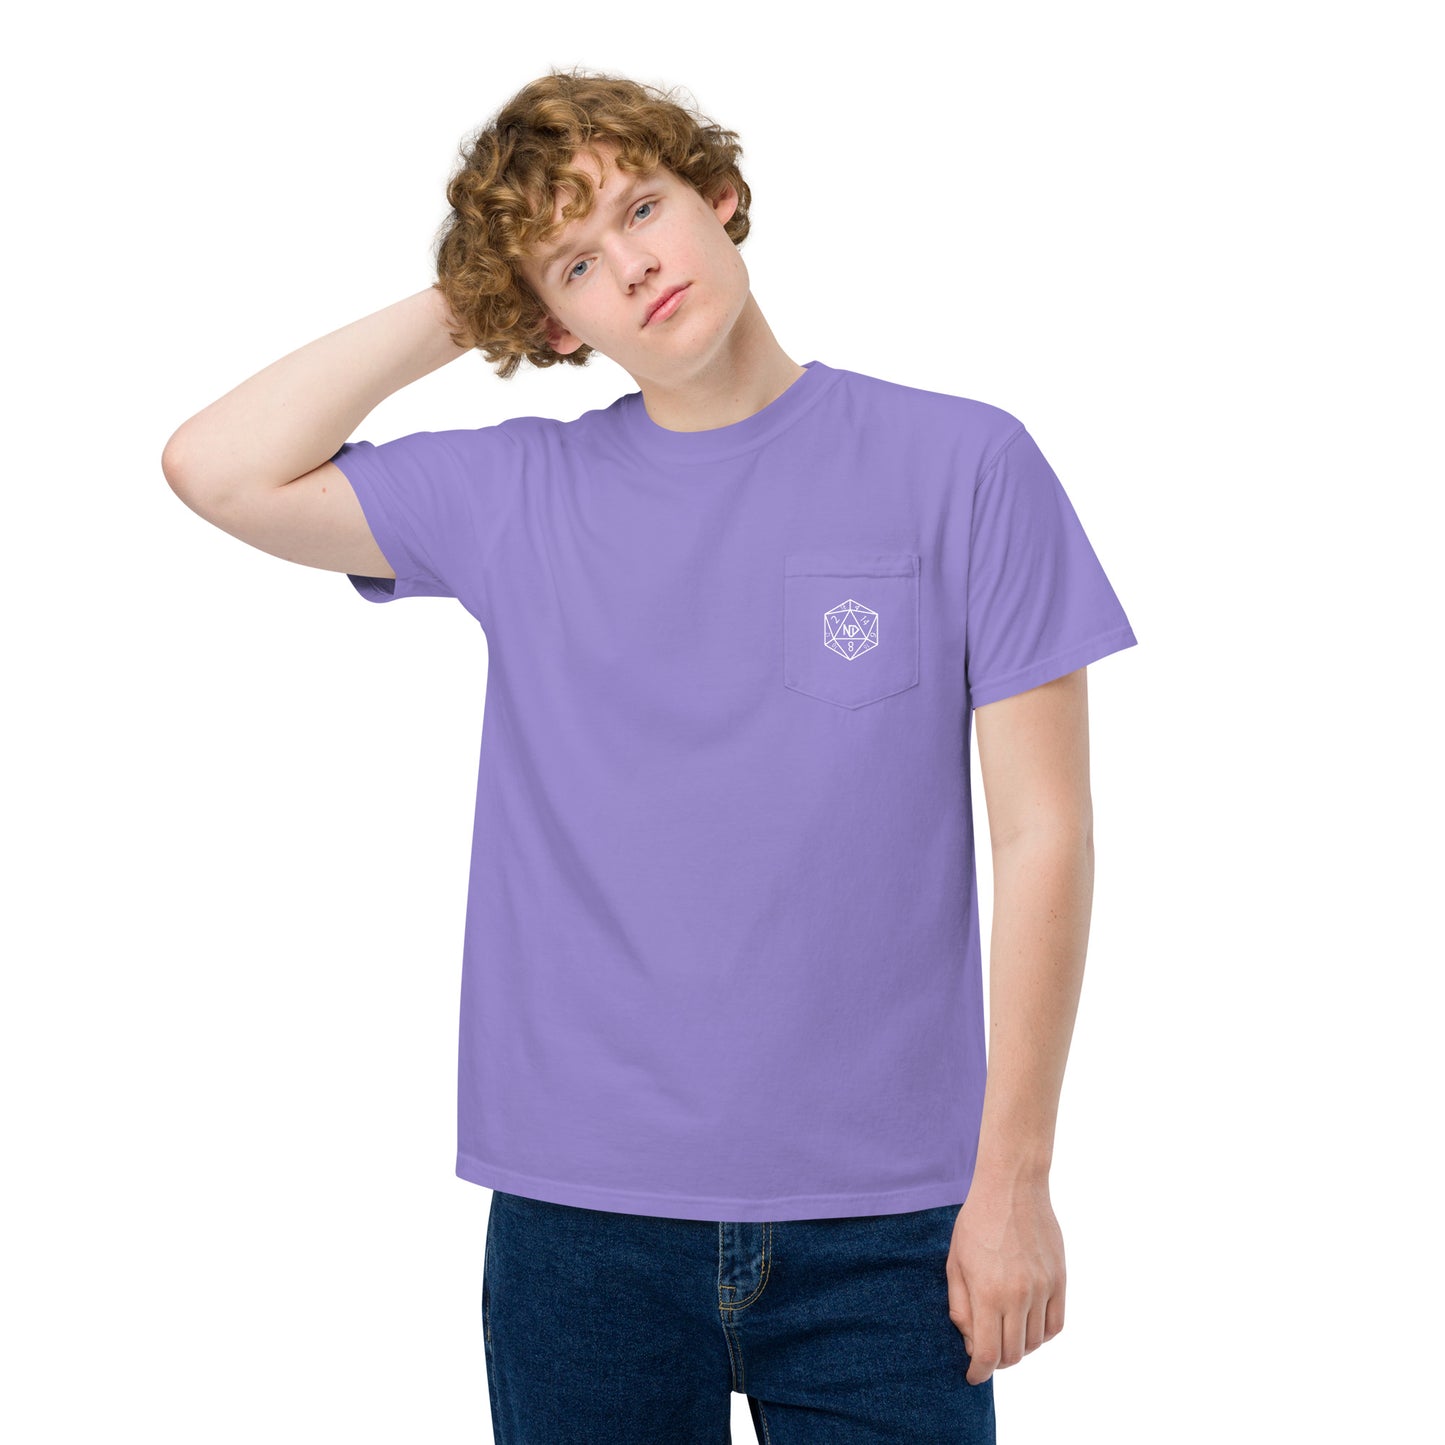 No Dishes D&D - Unisex garment-dyed pocket t-shirt